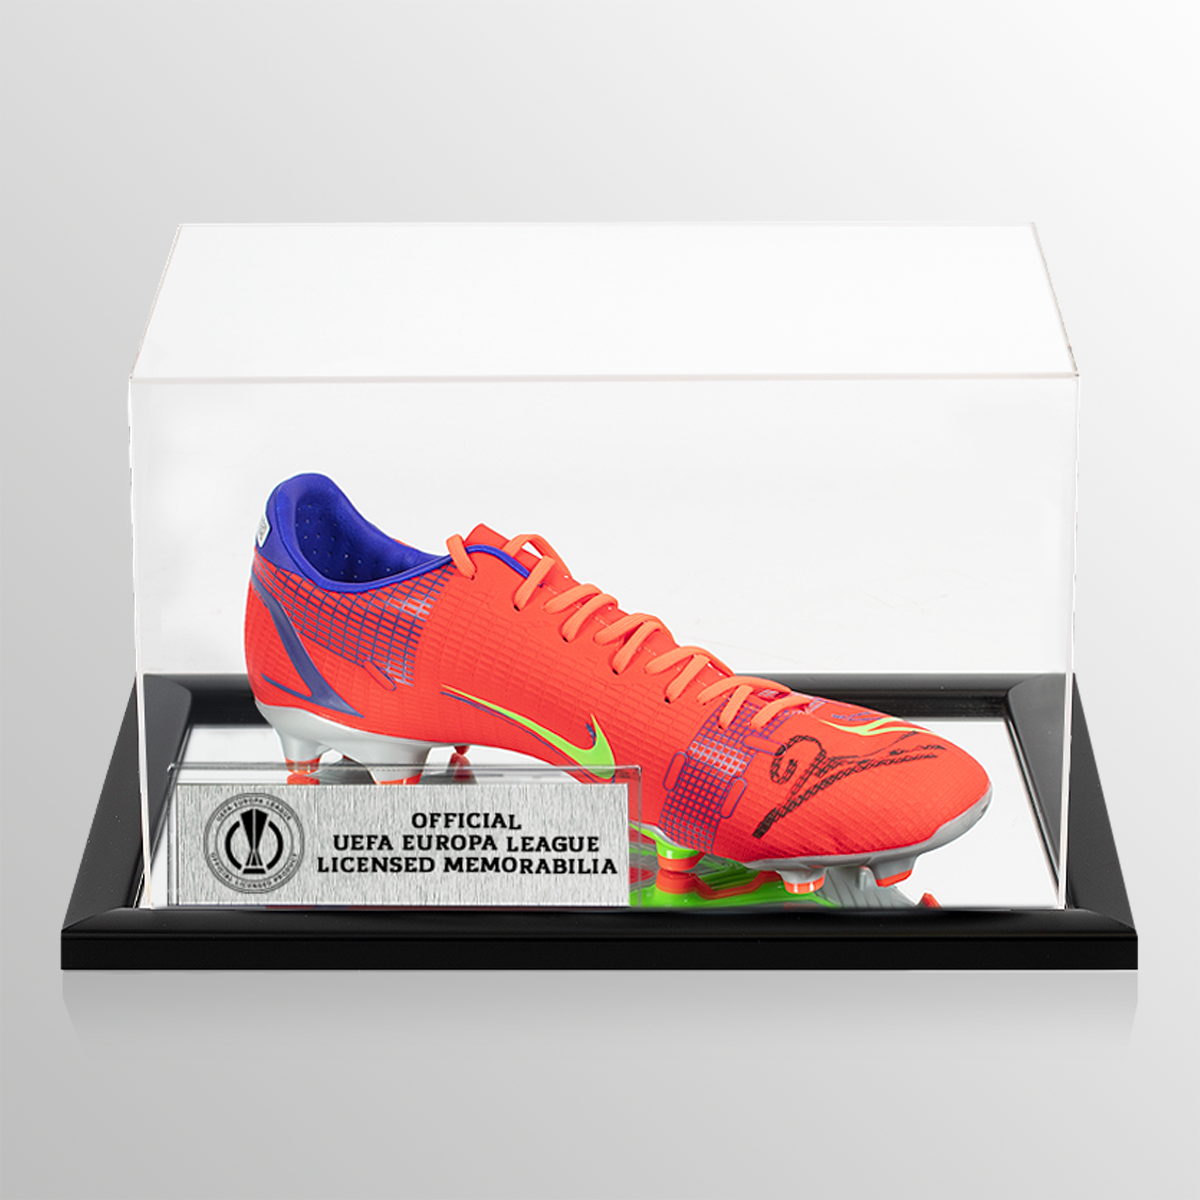 Robert Lewandowski Oficial de la UEFA Europa League firmó la bota Red Nike Mercurial en caso de acrílico